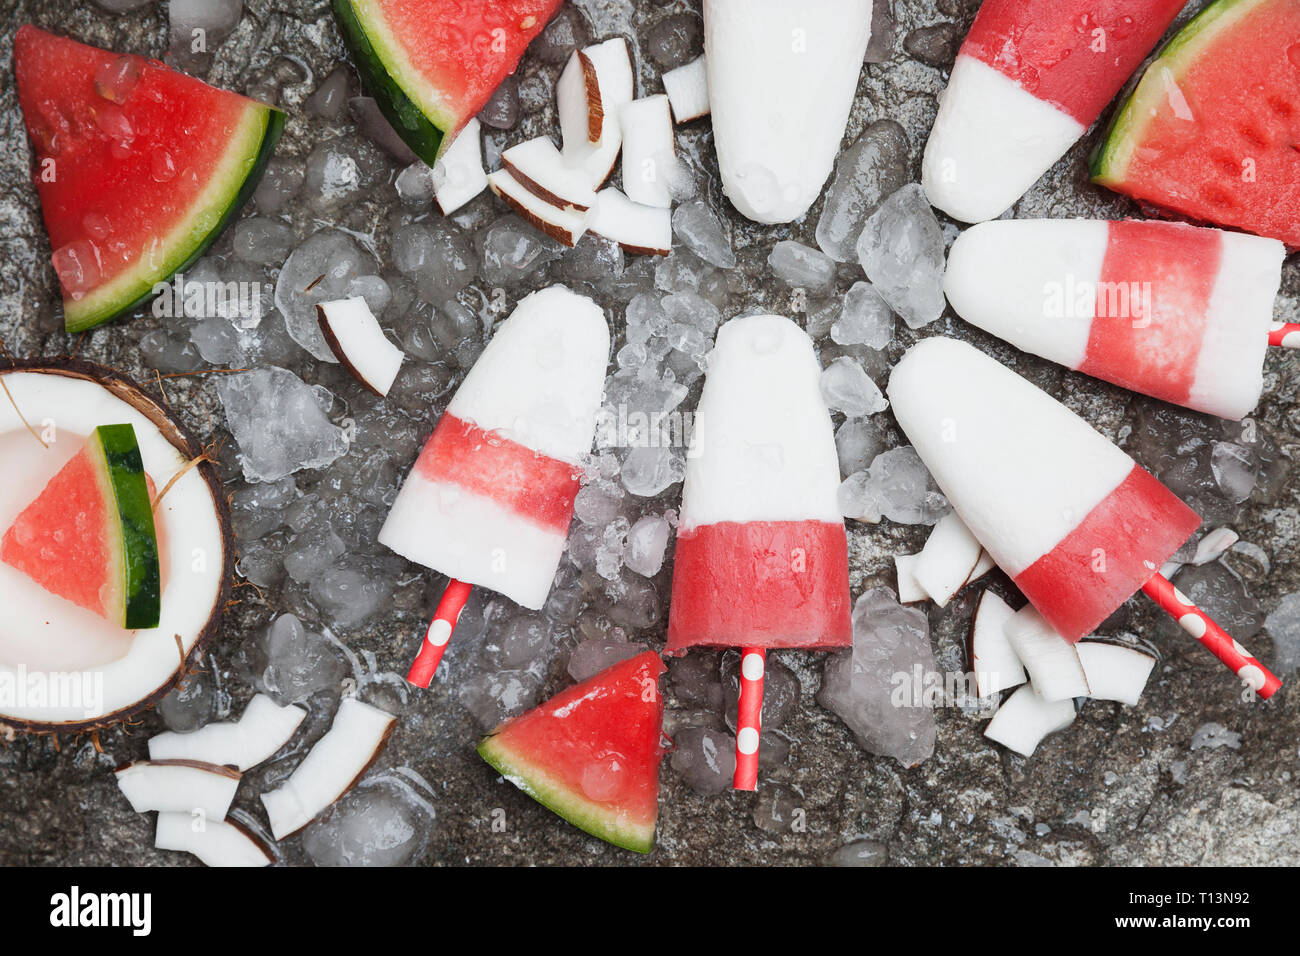 Sandía casero de coco chupachupas hielo sobre hielo picado Foto de stock